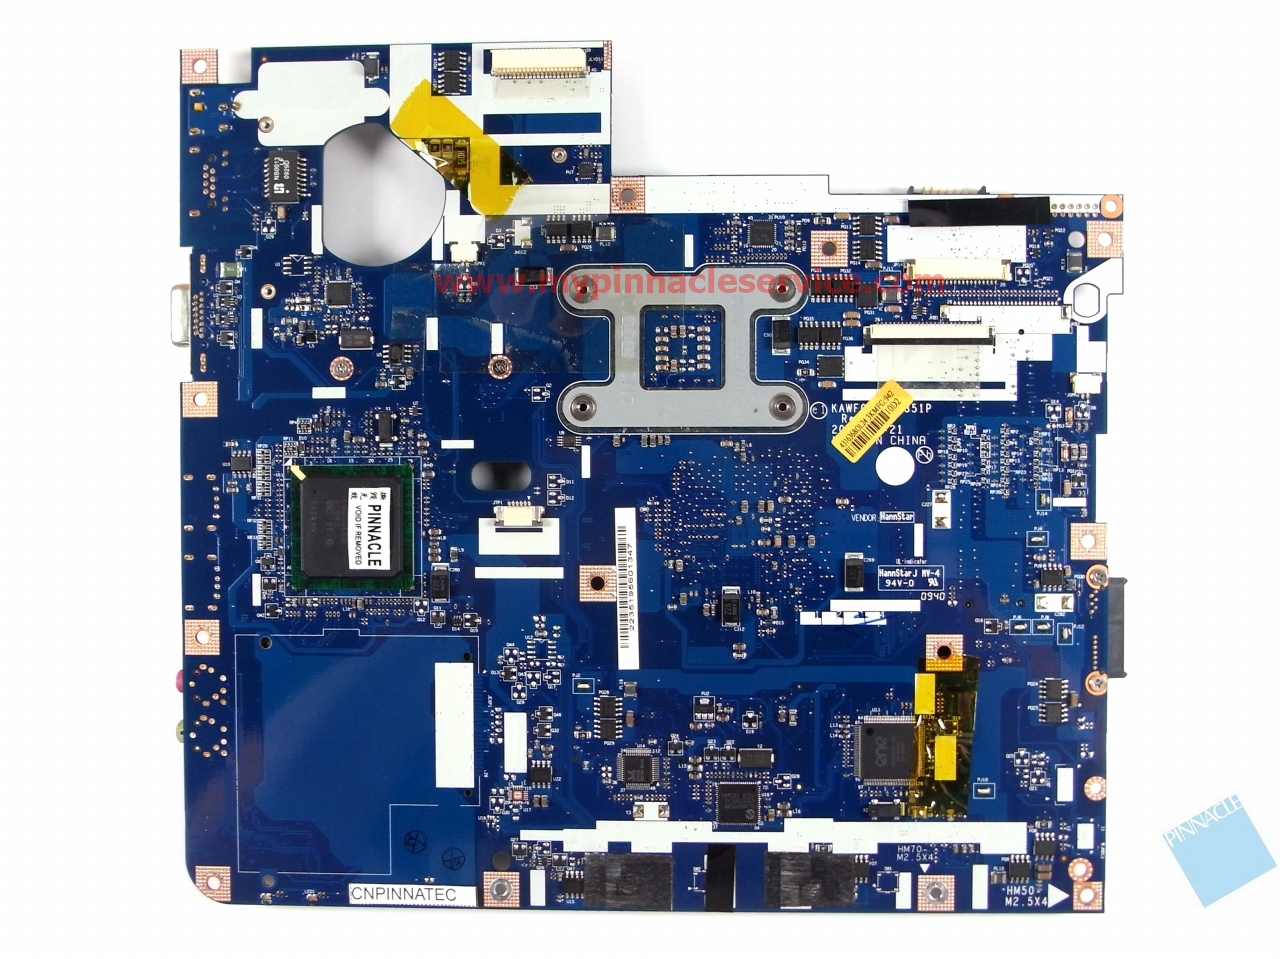 mbpgv02001-motherboard-for-acer-emachines-e525-e725-aspire-5332-5732-la-4851p-rimg0085.jpg